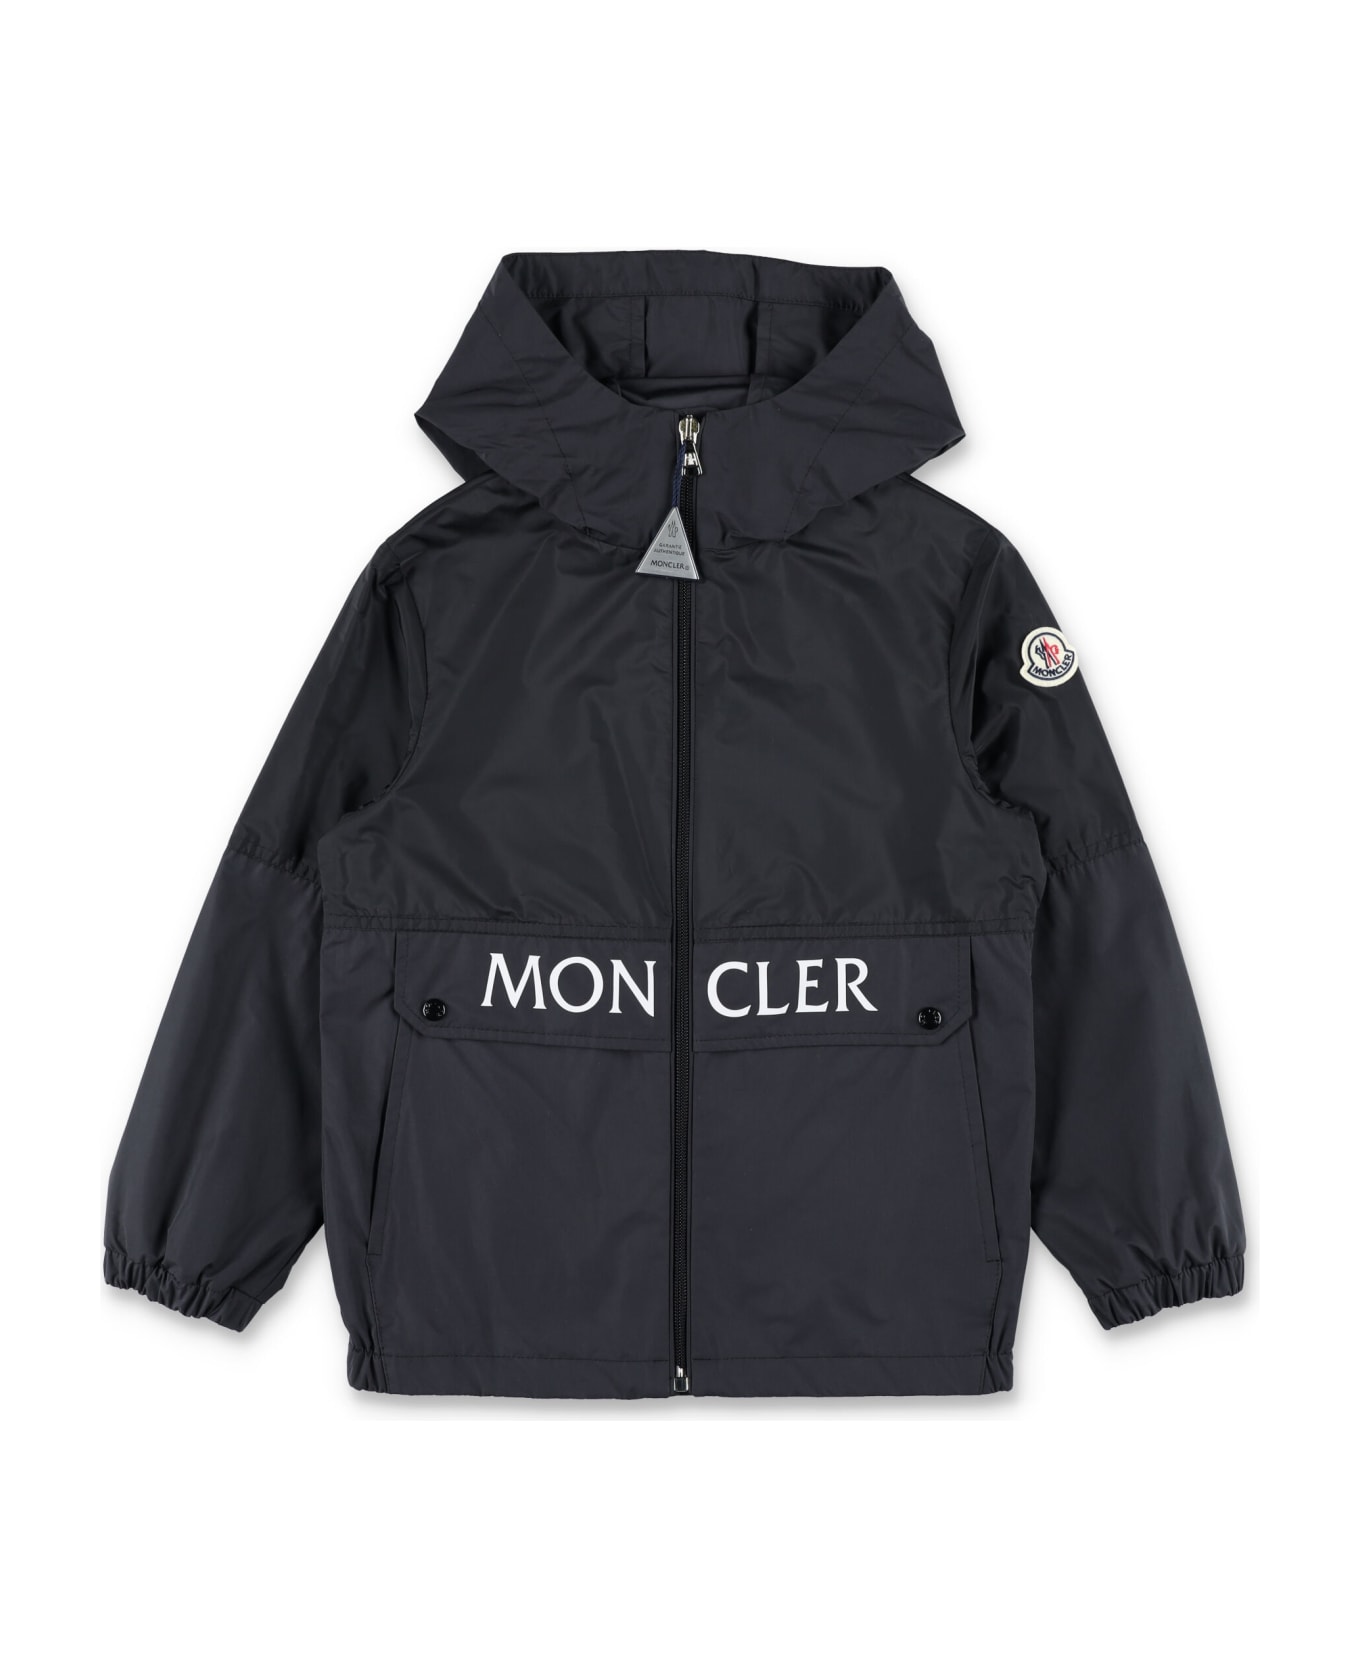 Moncler Jaly Jacket - BLACK